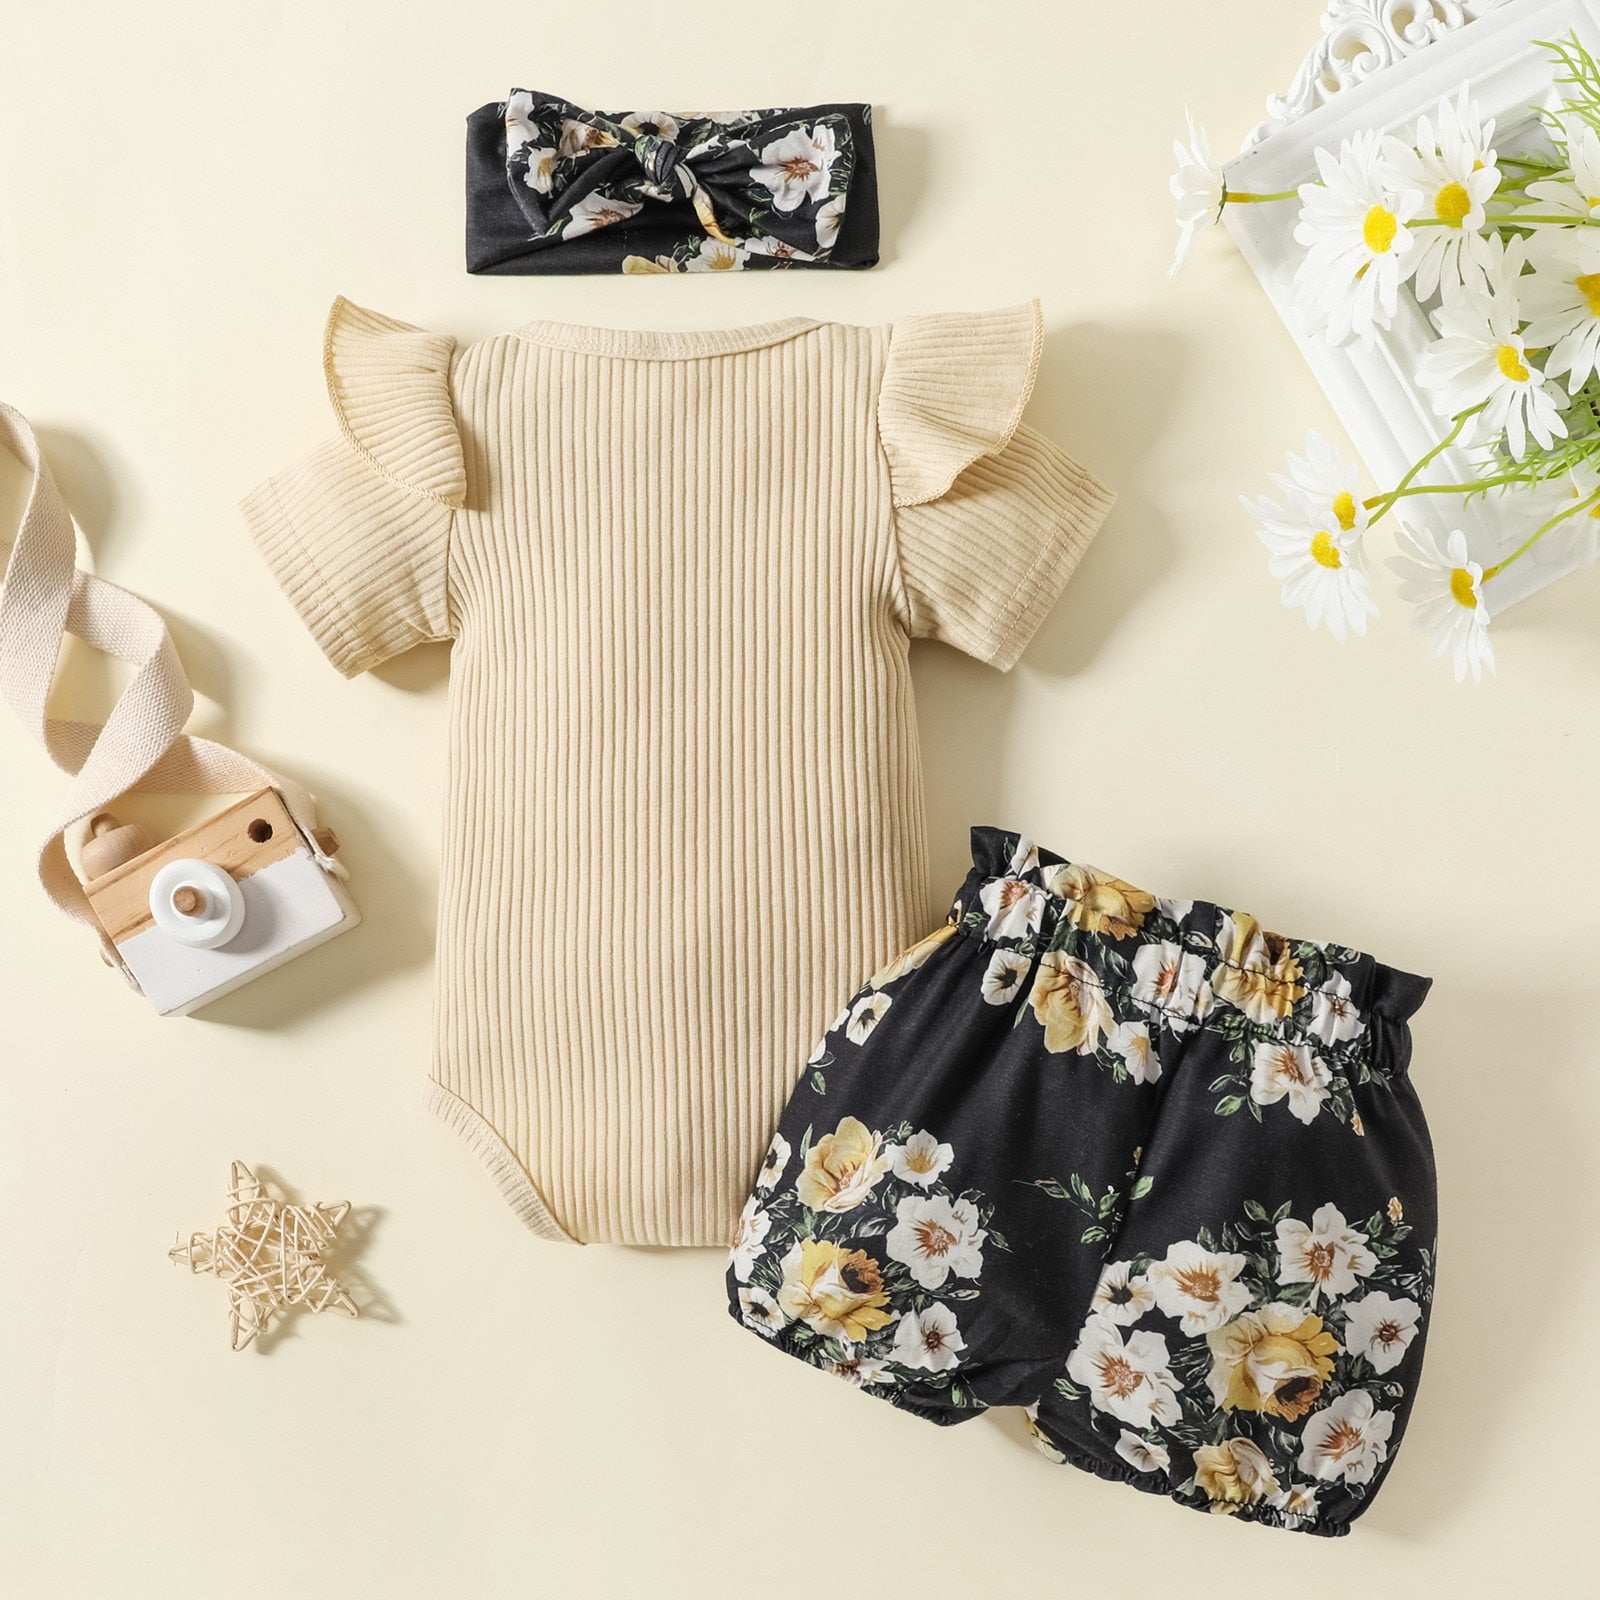 Adorable Infant Baby Girls Summer Clothes Sets - Short Sleeve Ribbed Romper Bodysuit+Shorts+Headband Sets